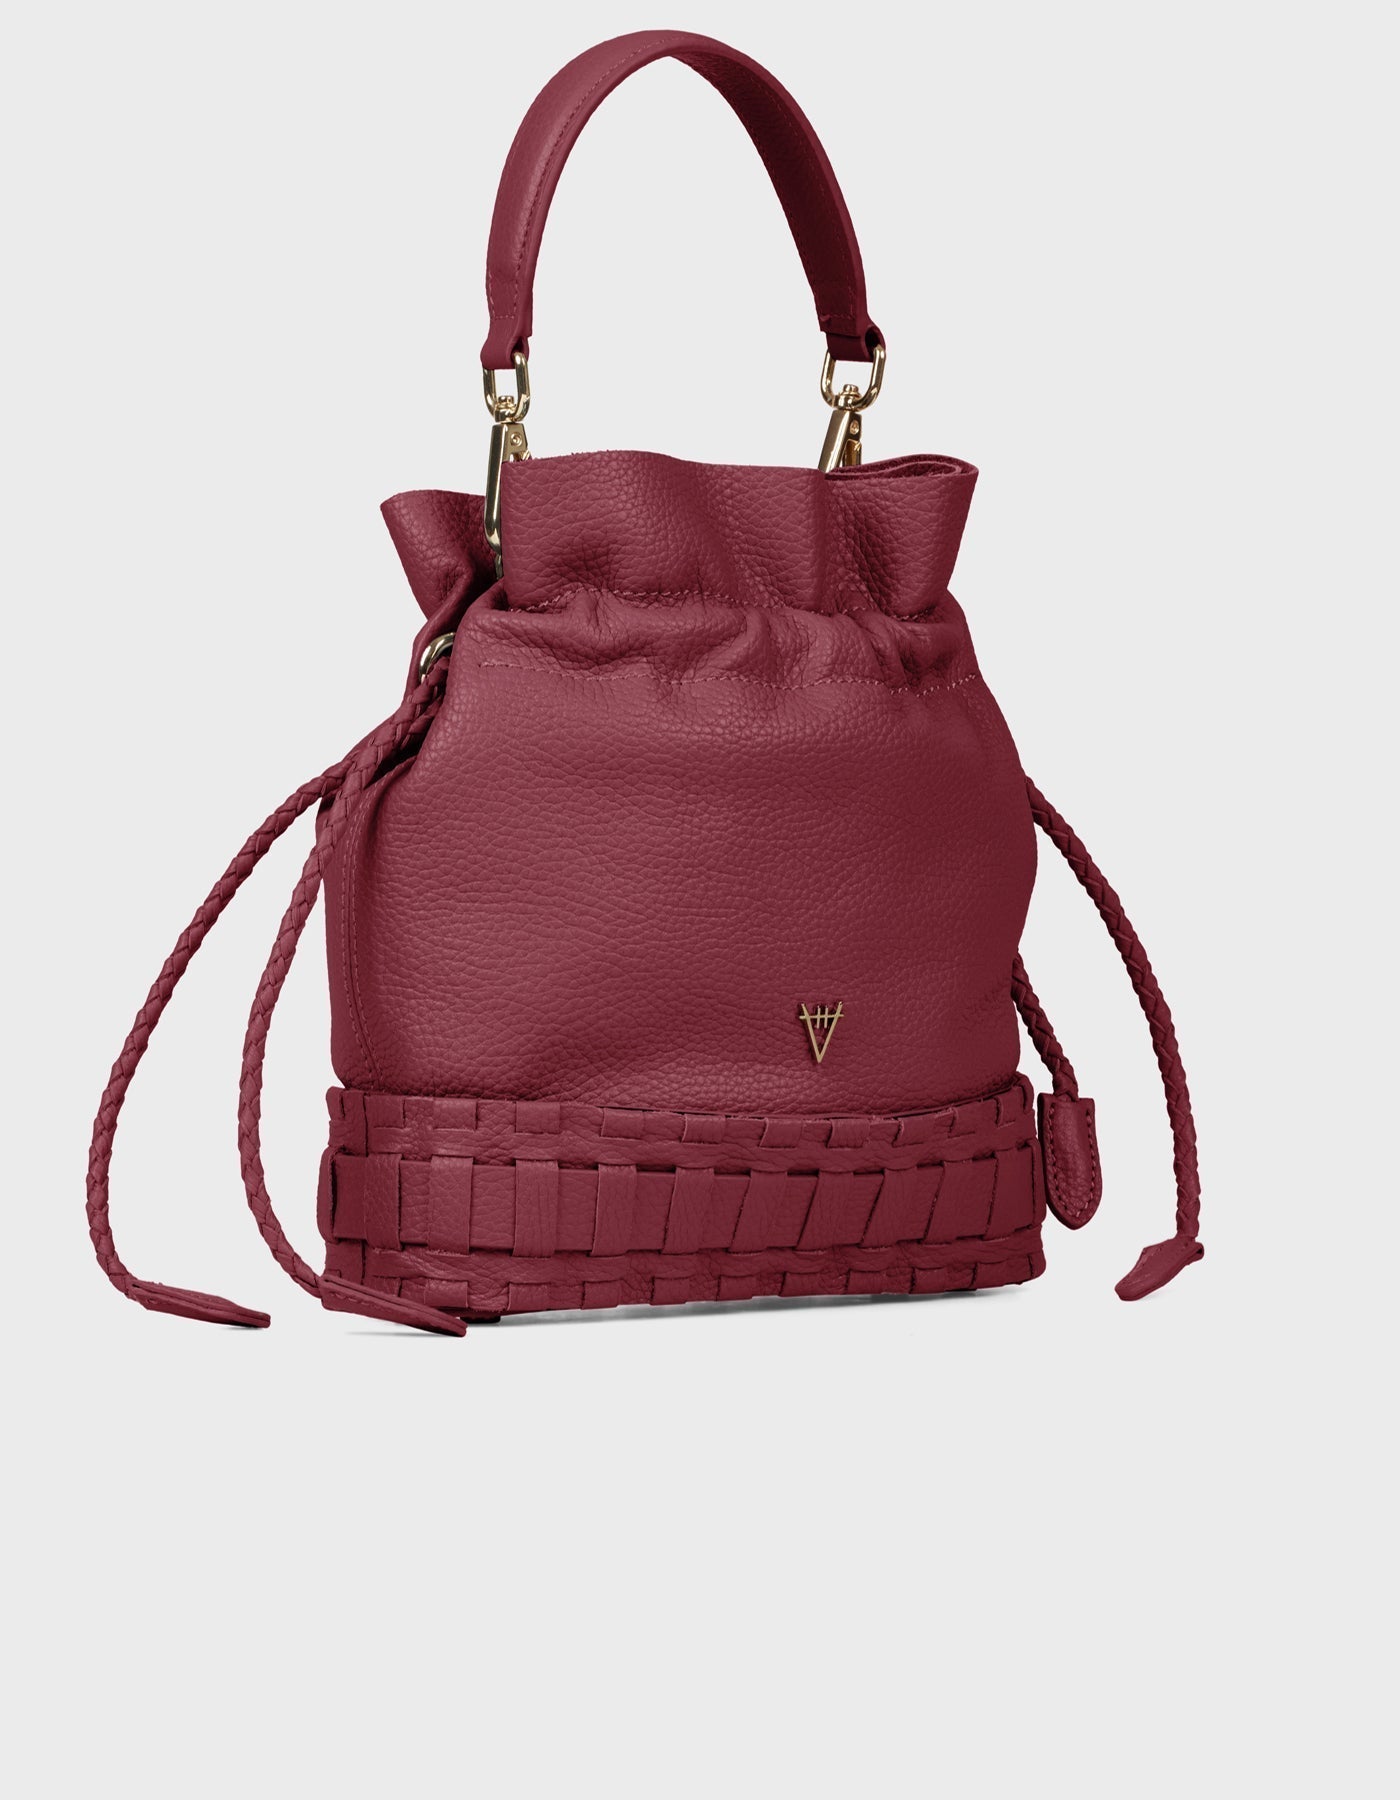 Lavinia Bucket Bag - Finest Quality HiVa Atelier GmbH Leather Accessories